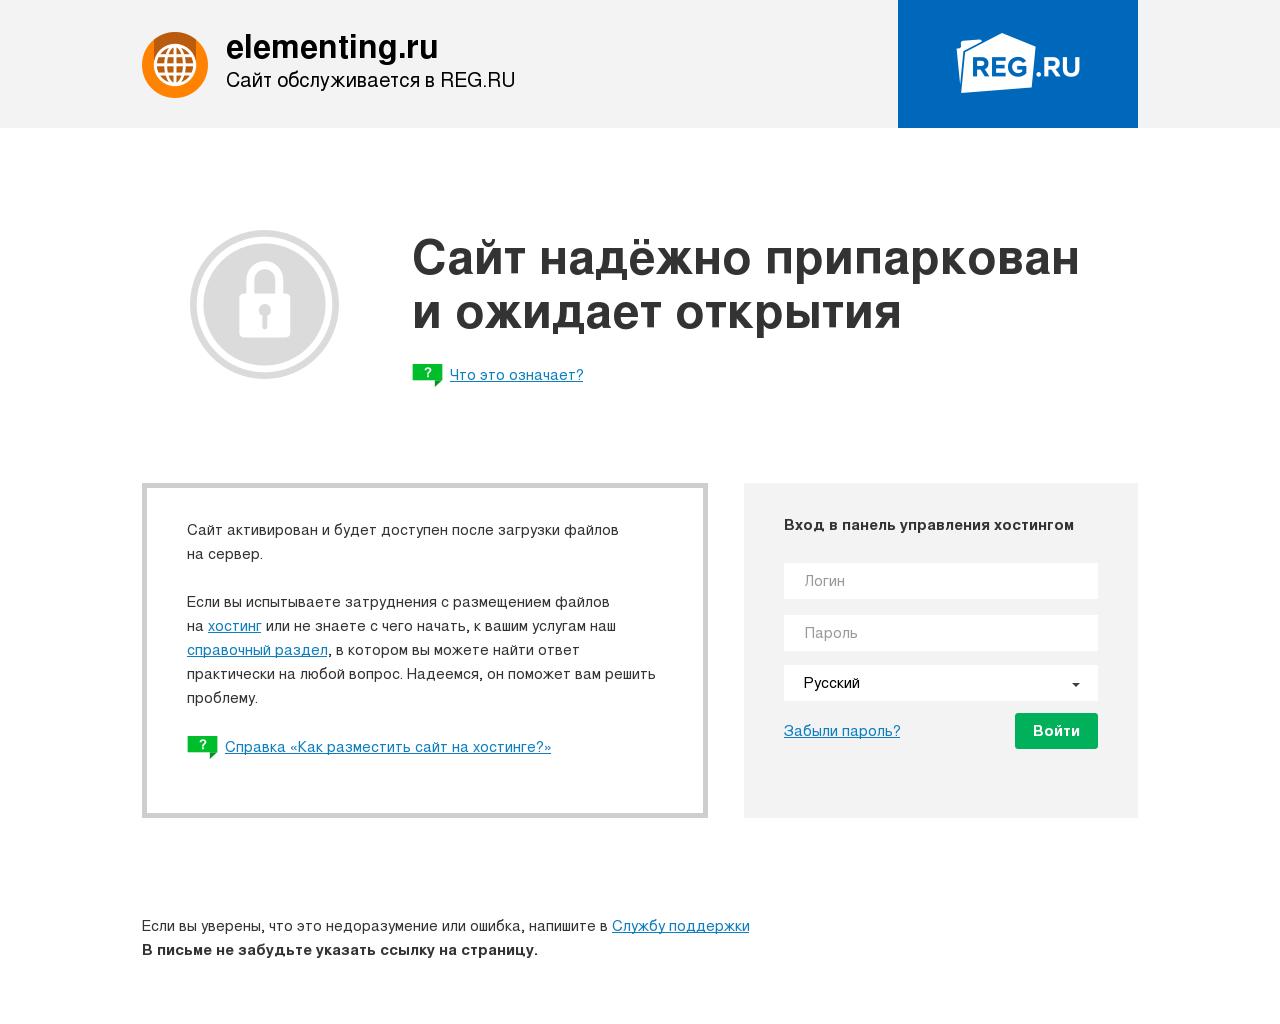 Изображение сайта elementing.ru в разрешении 1280x1024